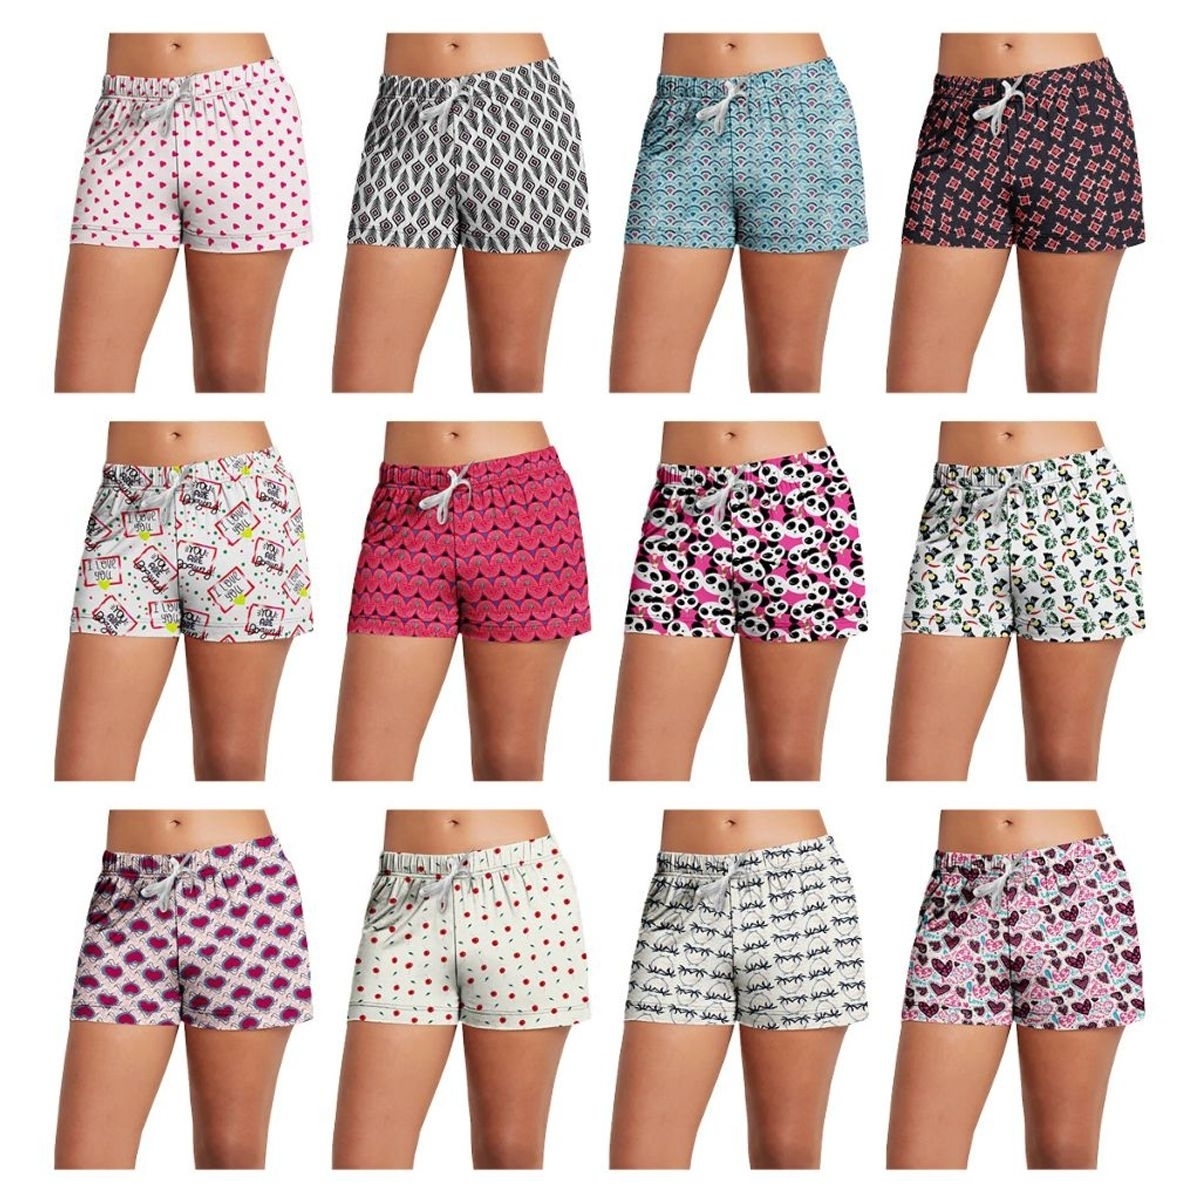 Multi-Pack: Women's Super-Soft Lightweight Fun Printed Comfy Lounge Bottom Pajama Shorts W/ Drawstring - 3-pack, Medium, Animal